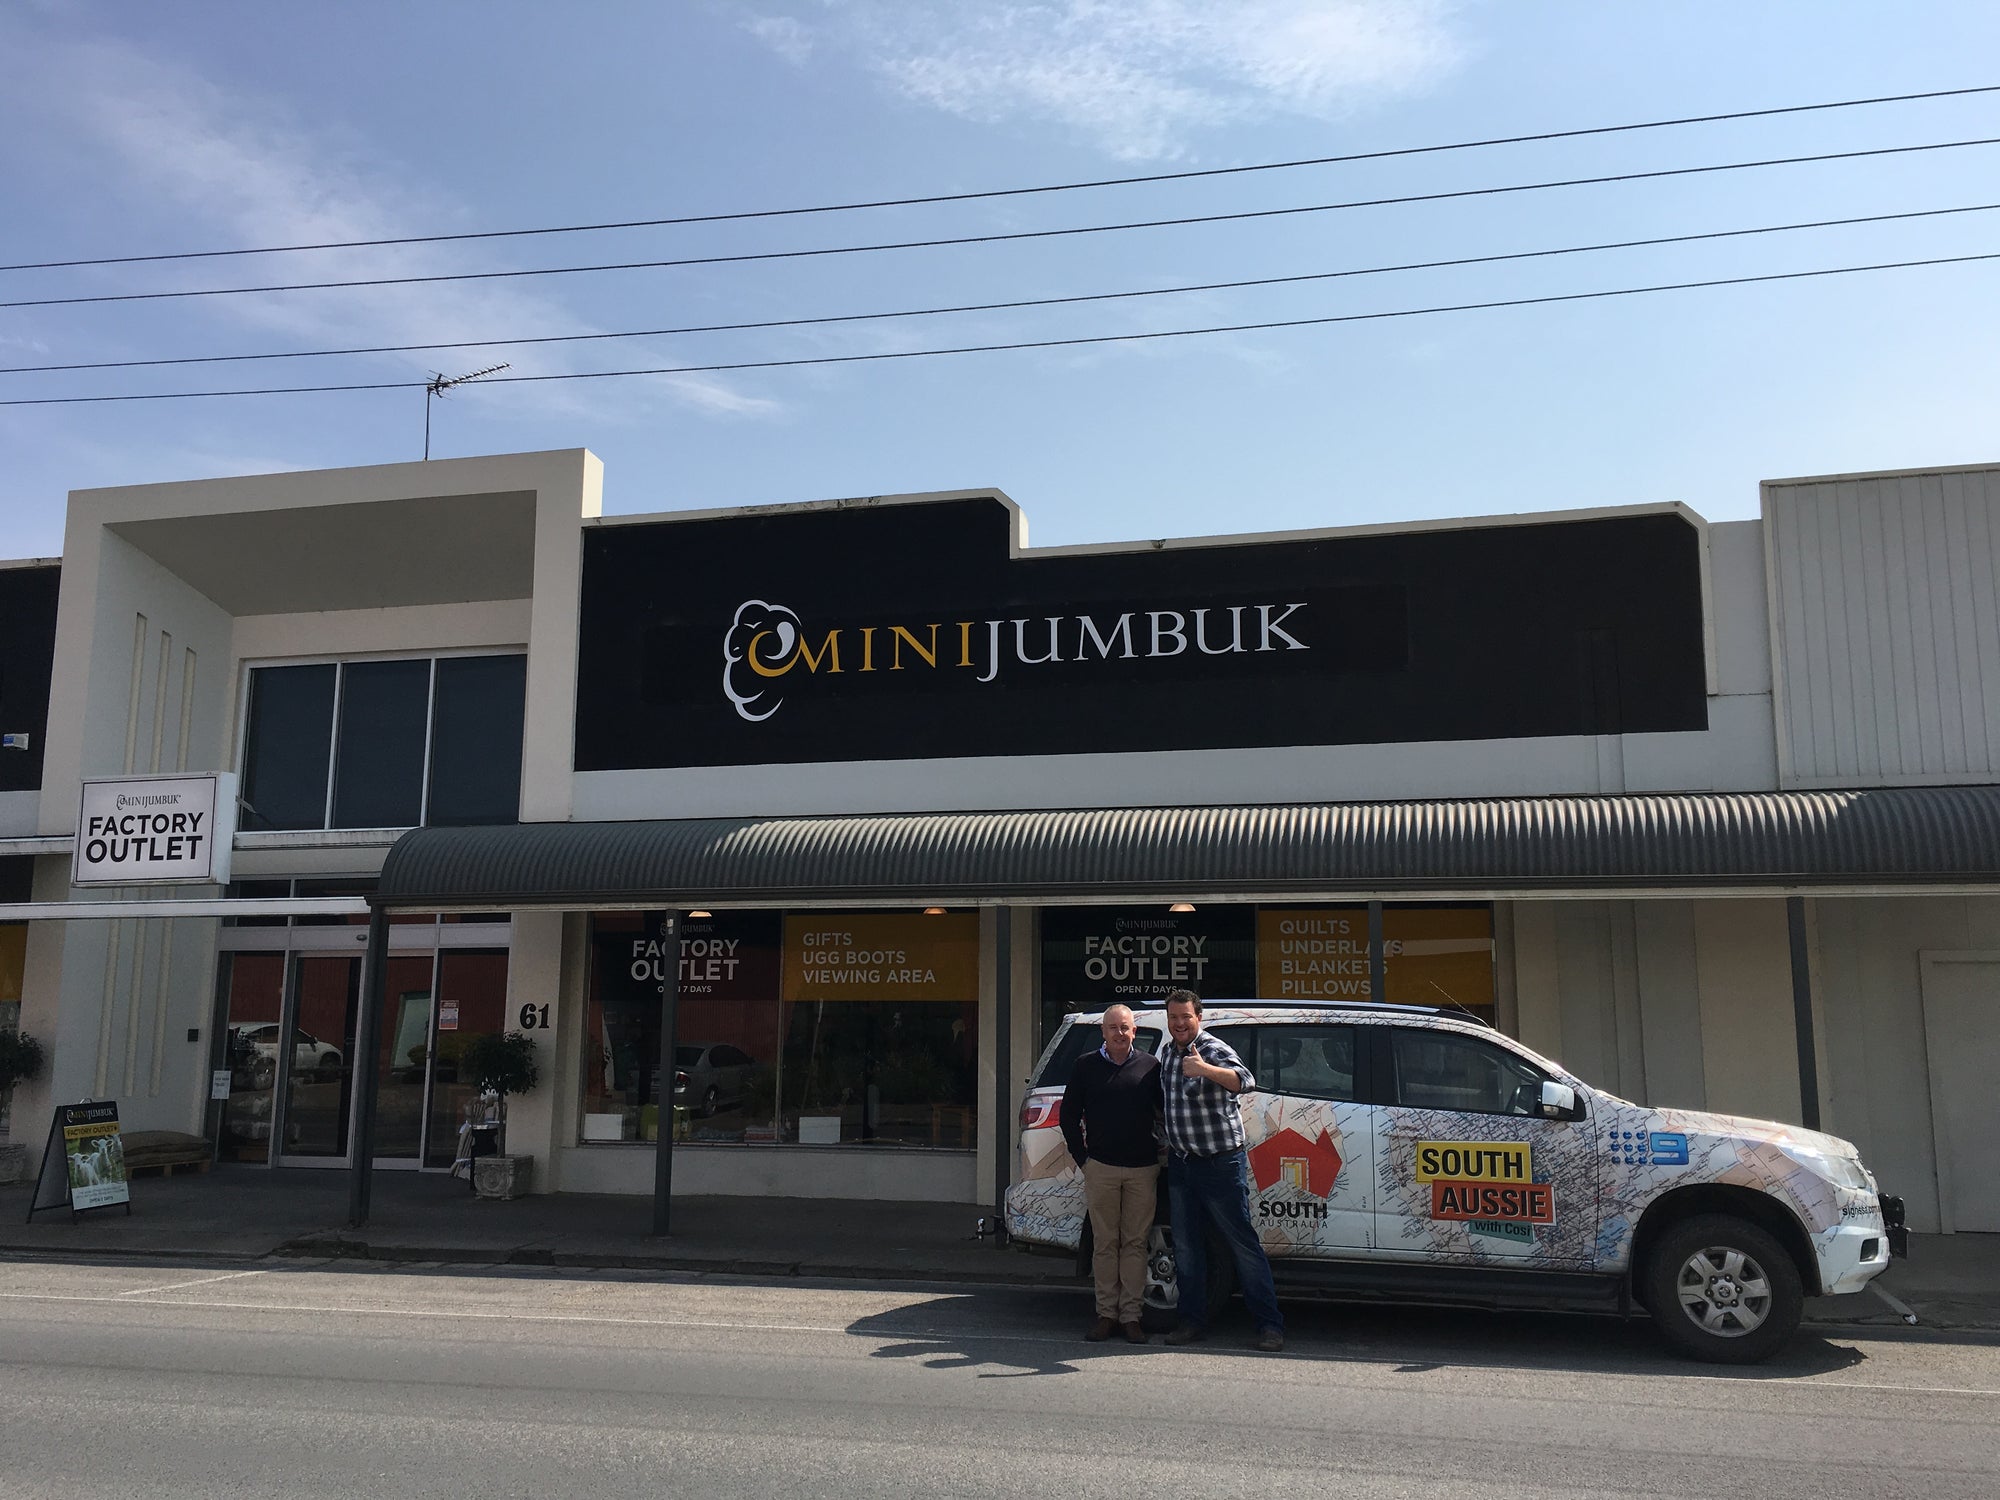 MiniJumbuk on South Aussie with Cosi